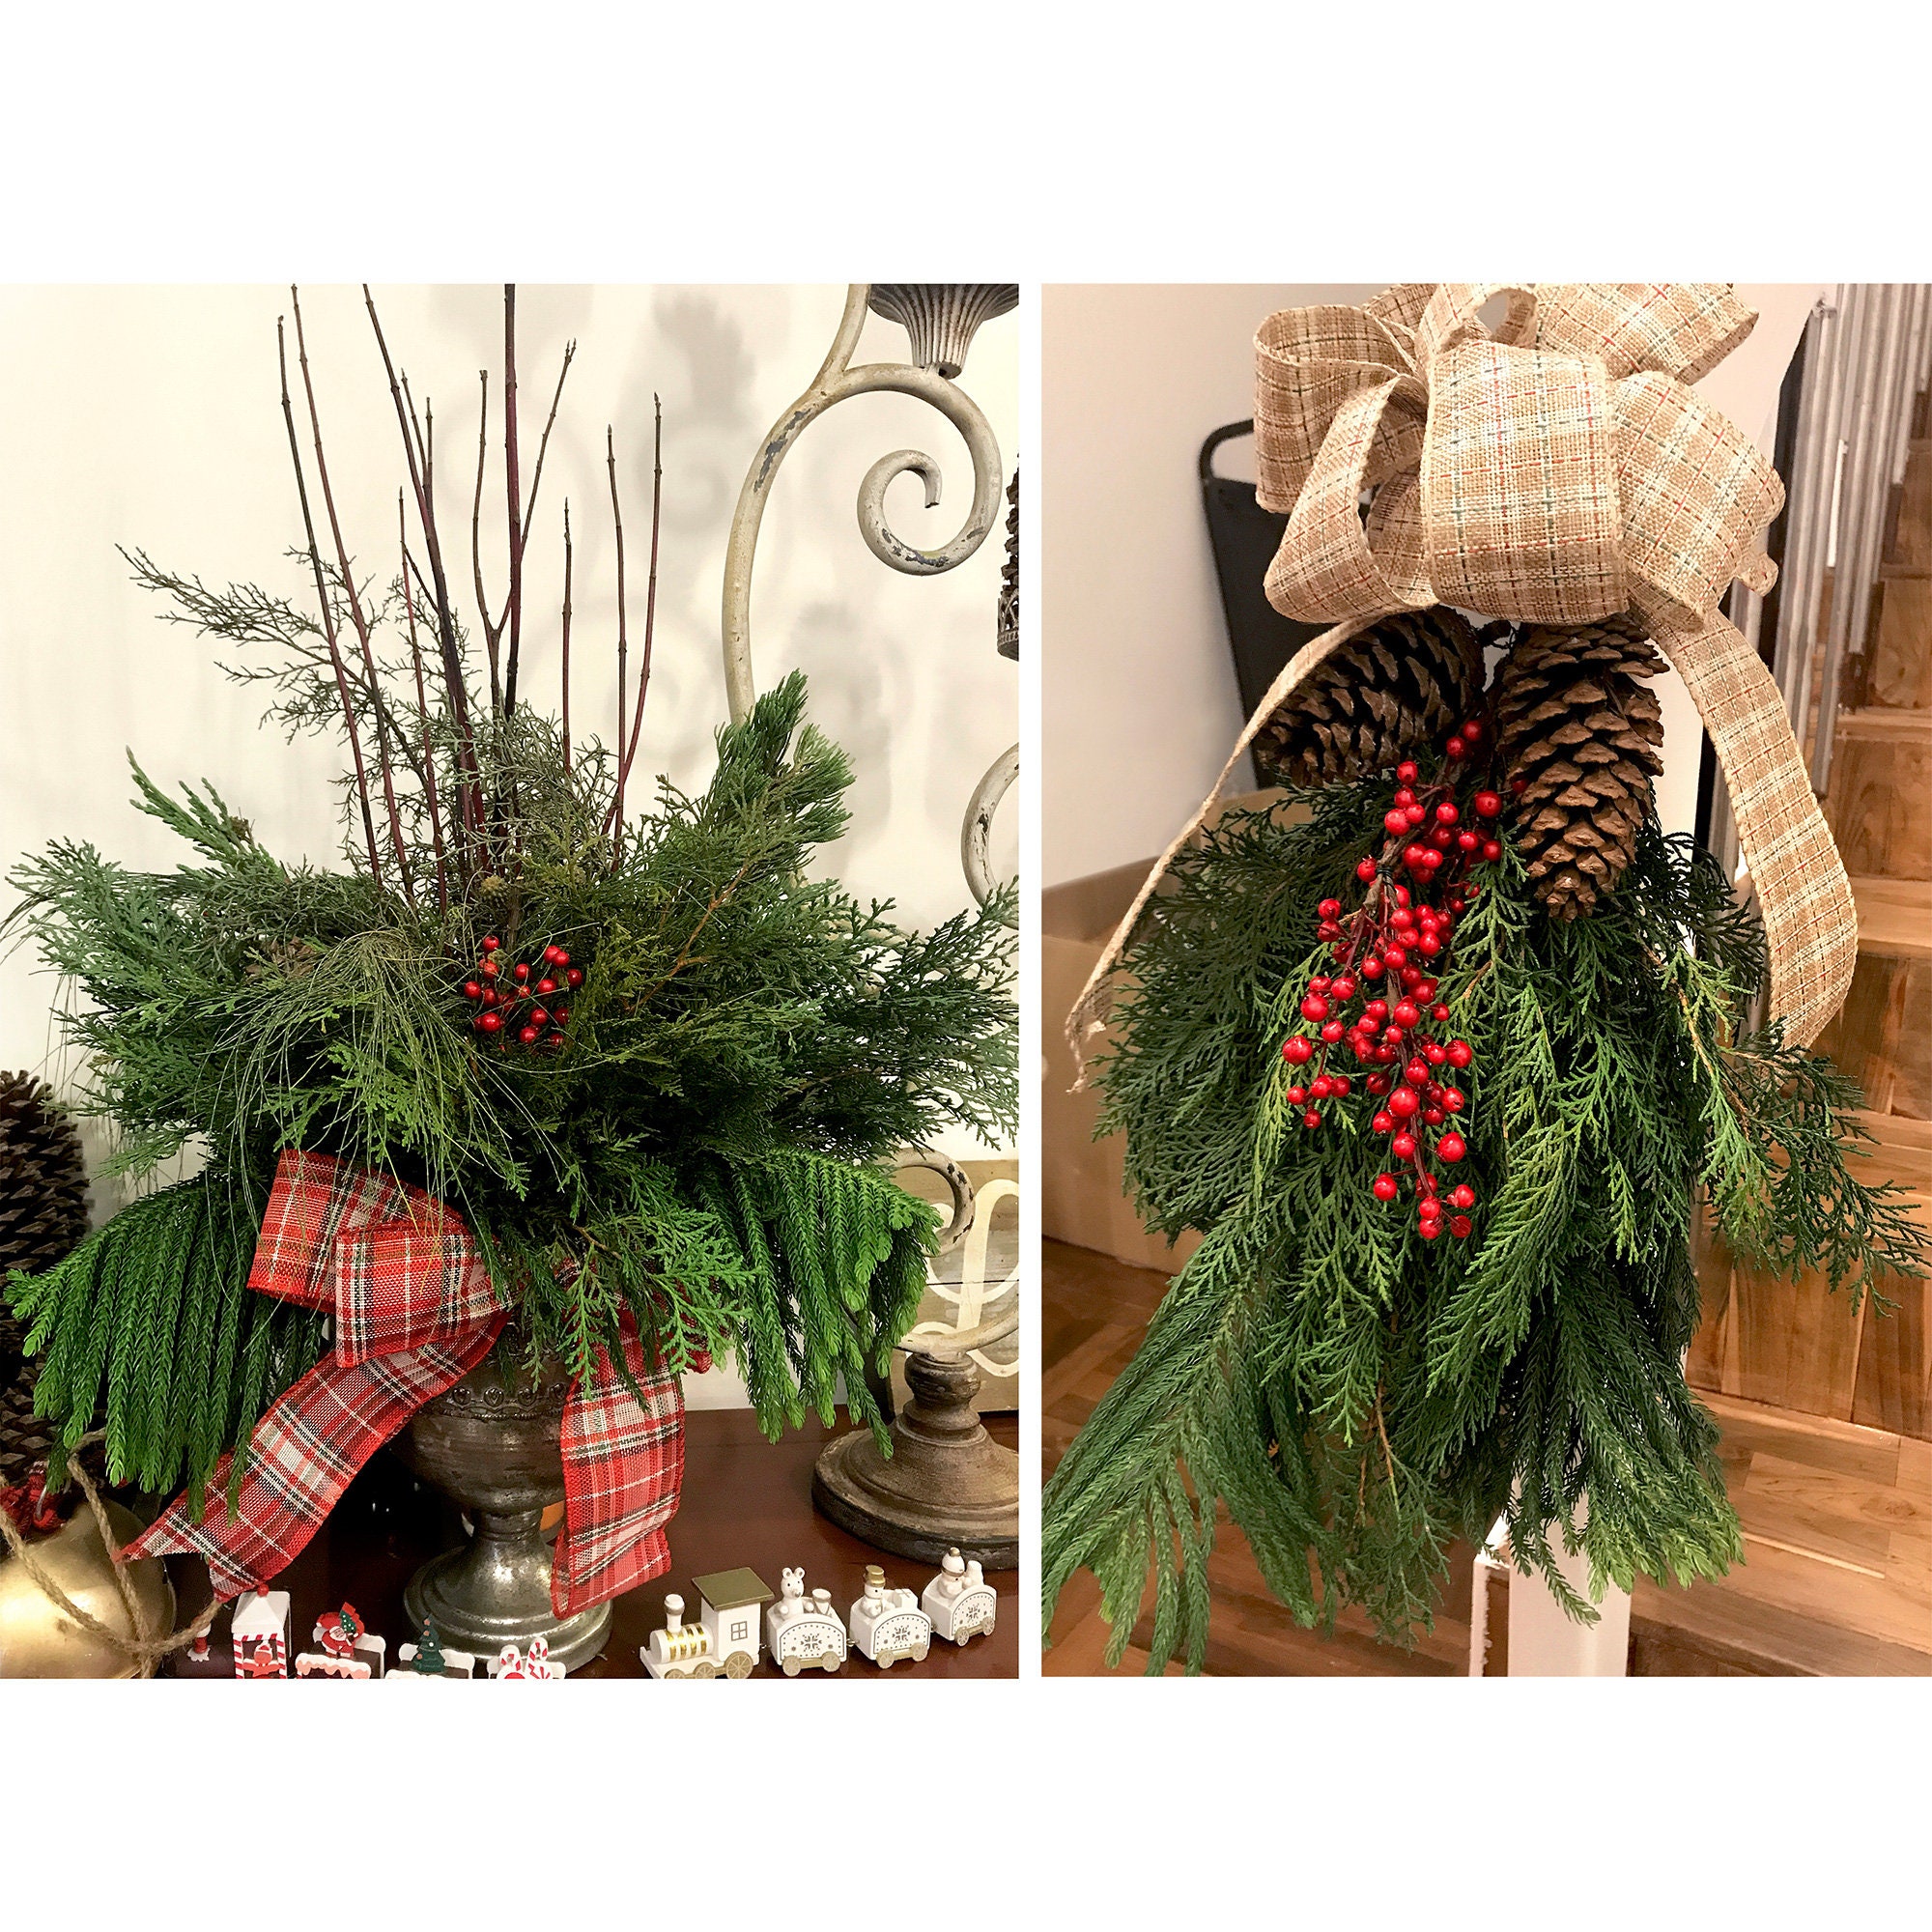 Festive Joyful Artificial Holly Red Berry Stems for the Holidays: Set –  FiveSeasonStuff